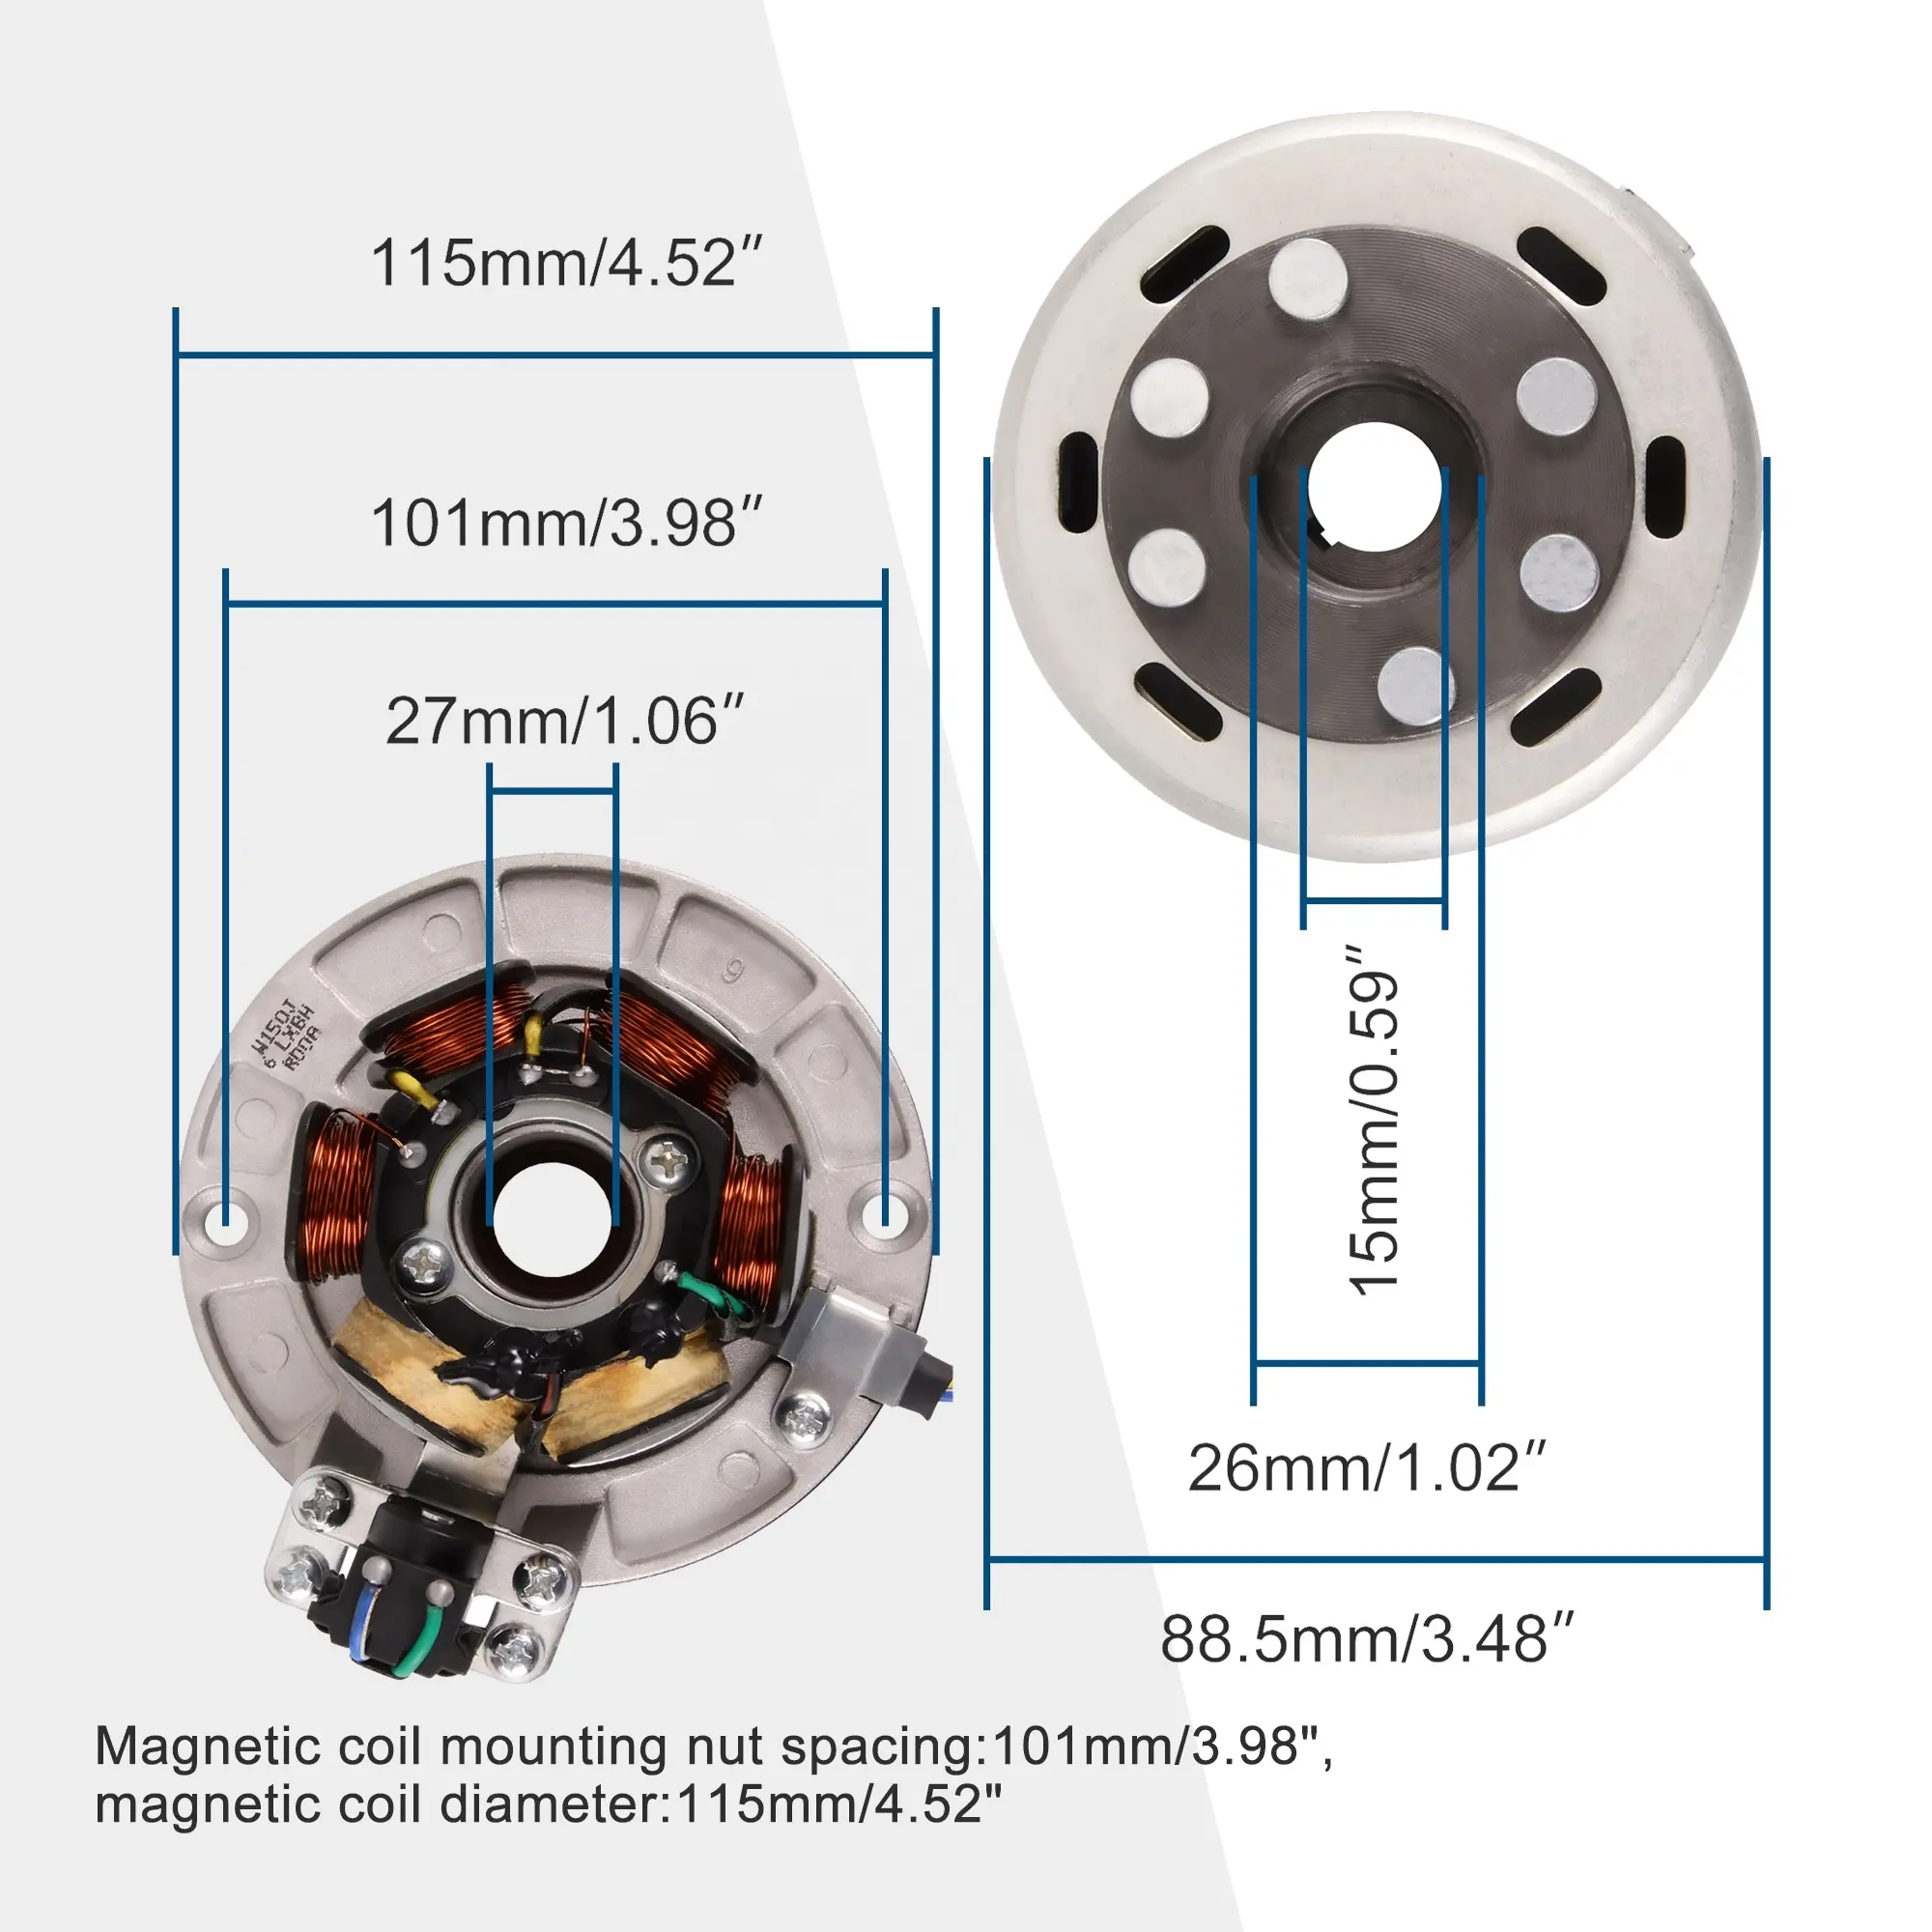 GOOFIT Magneto Stator volan Rotor kiti değiştirme YX 140cc 150cc 160cc Pit Dirt Bike